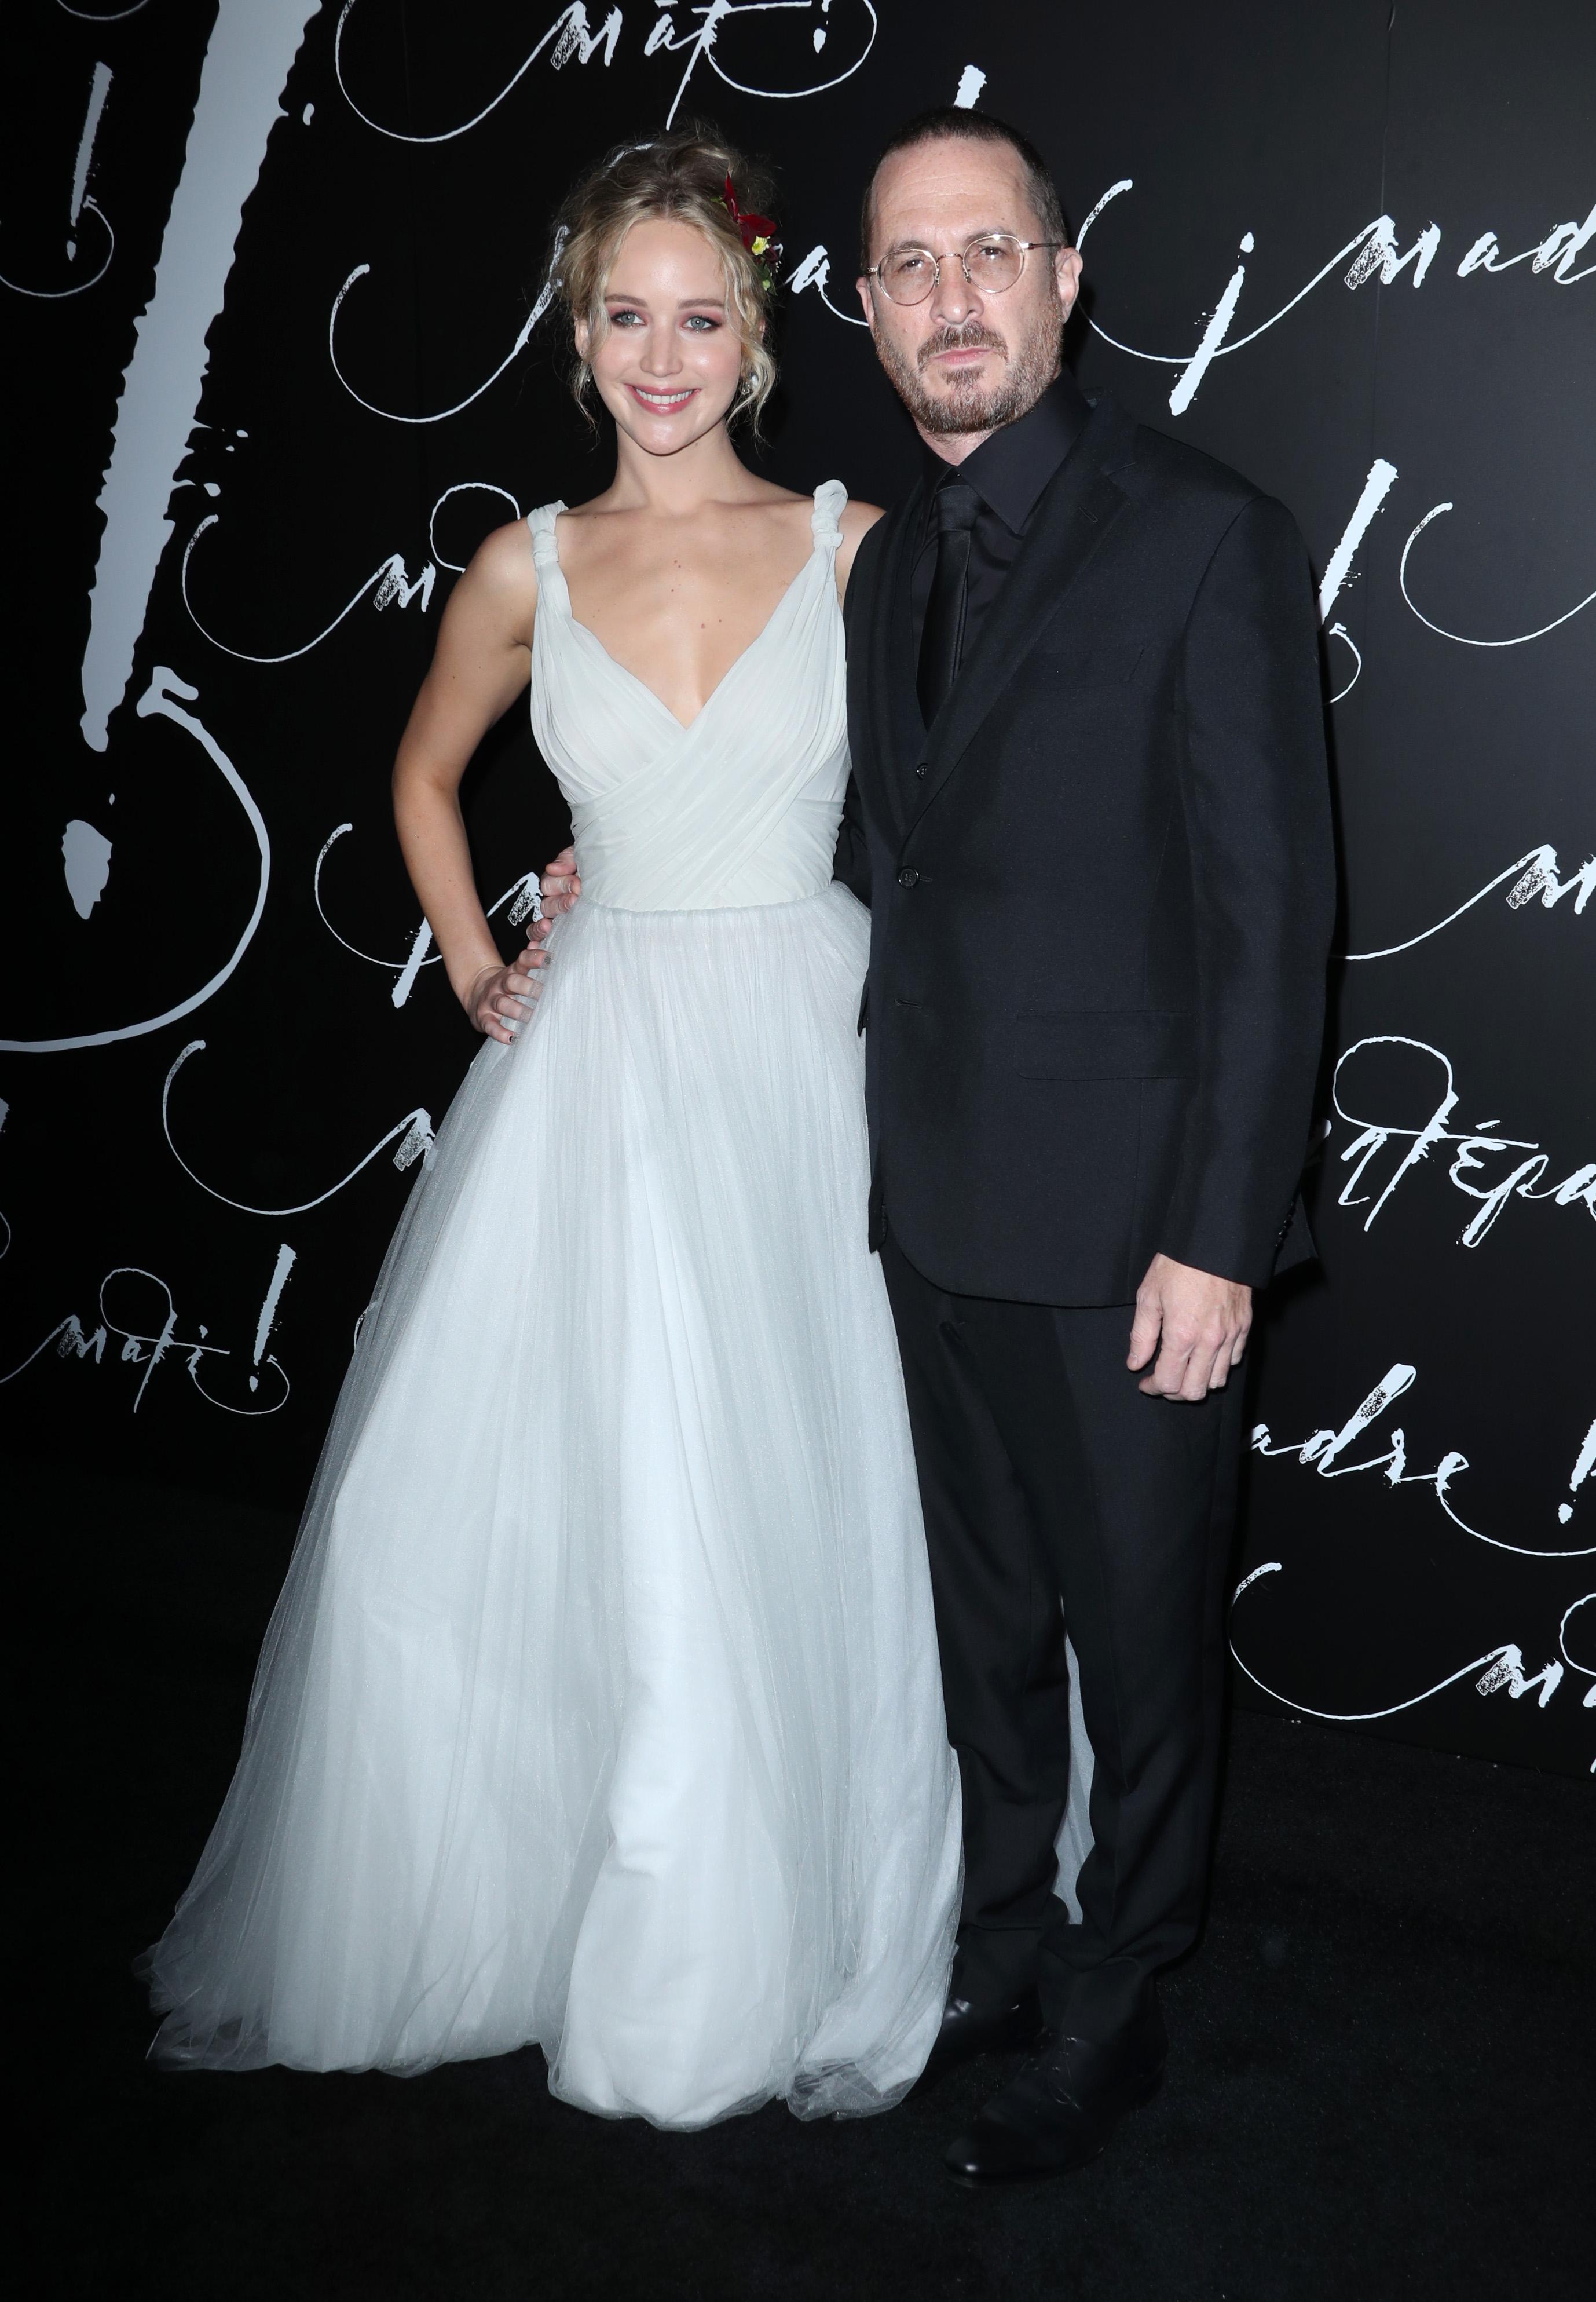 Jennifer Lawrence en Darren Aronofsky op de première van Mother!, 13 september 2017.